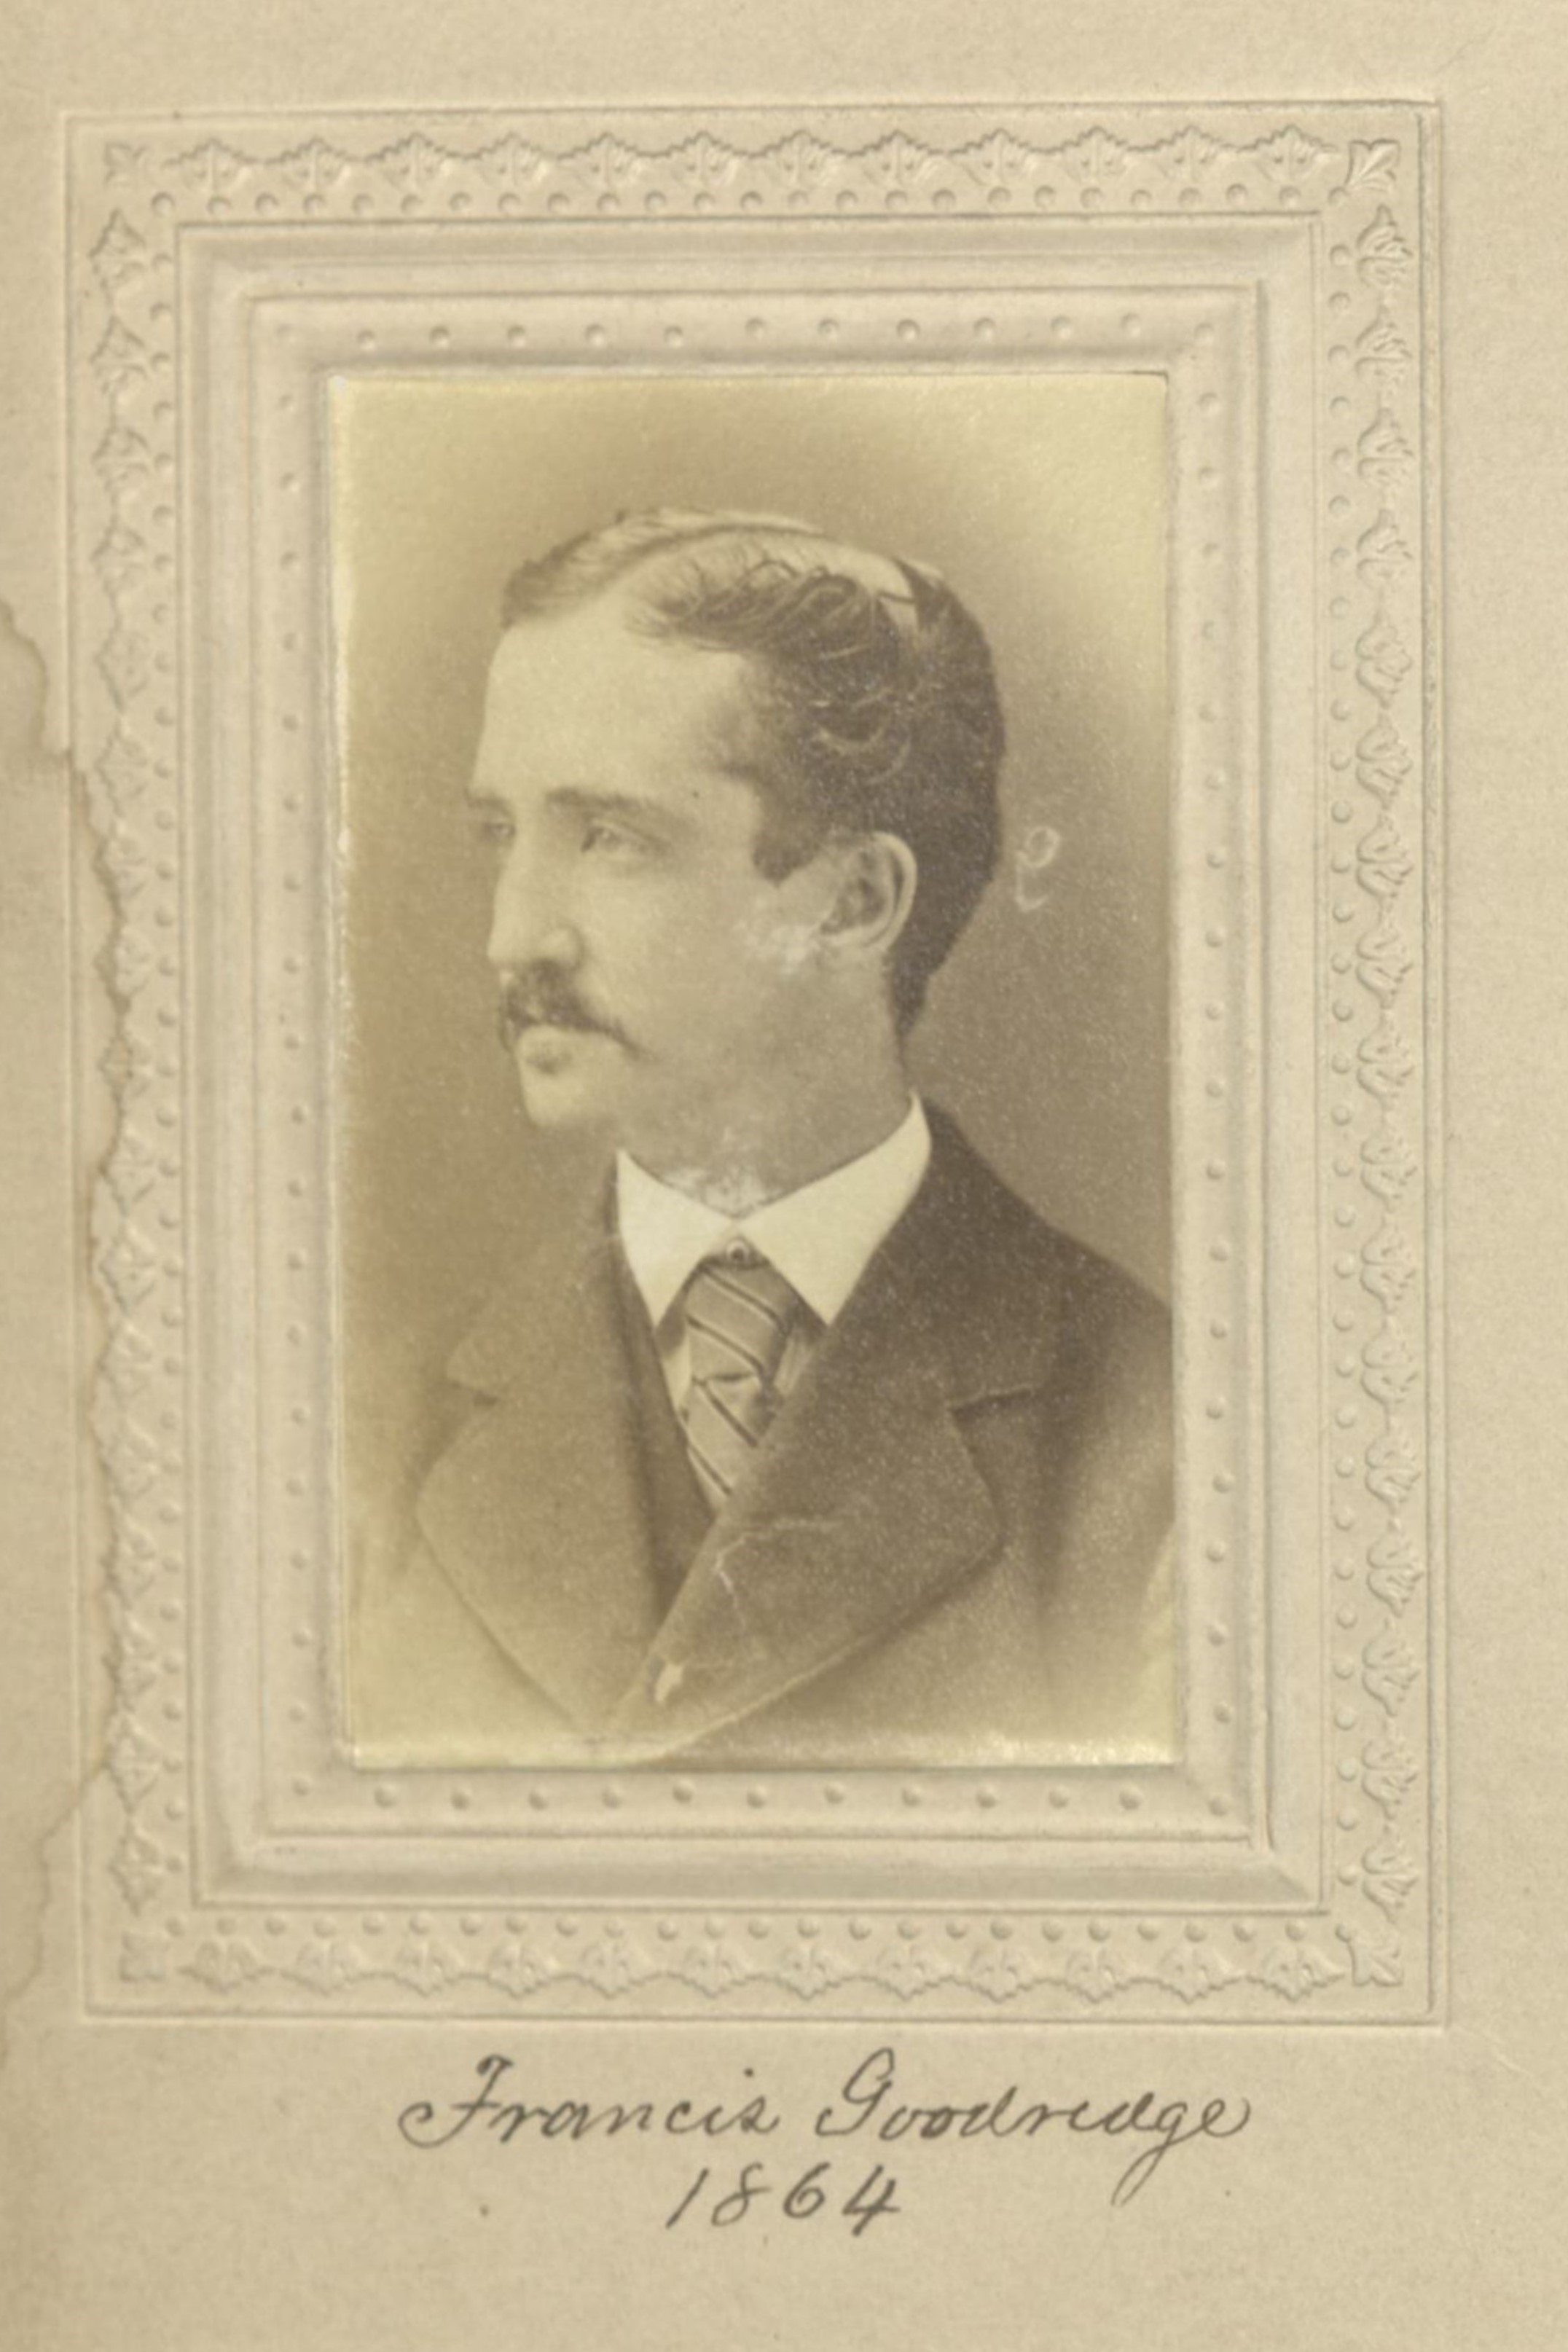 Member portrait of Francis Goodridge